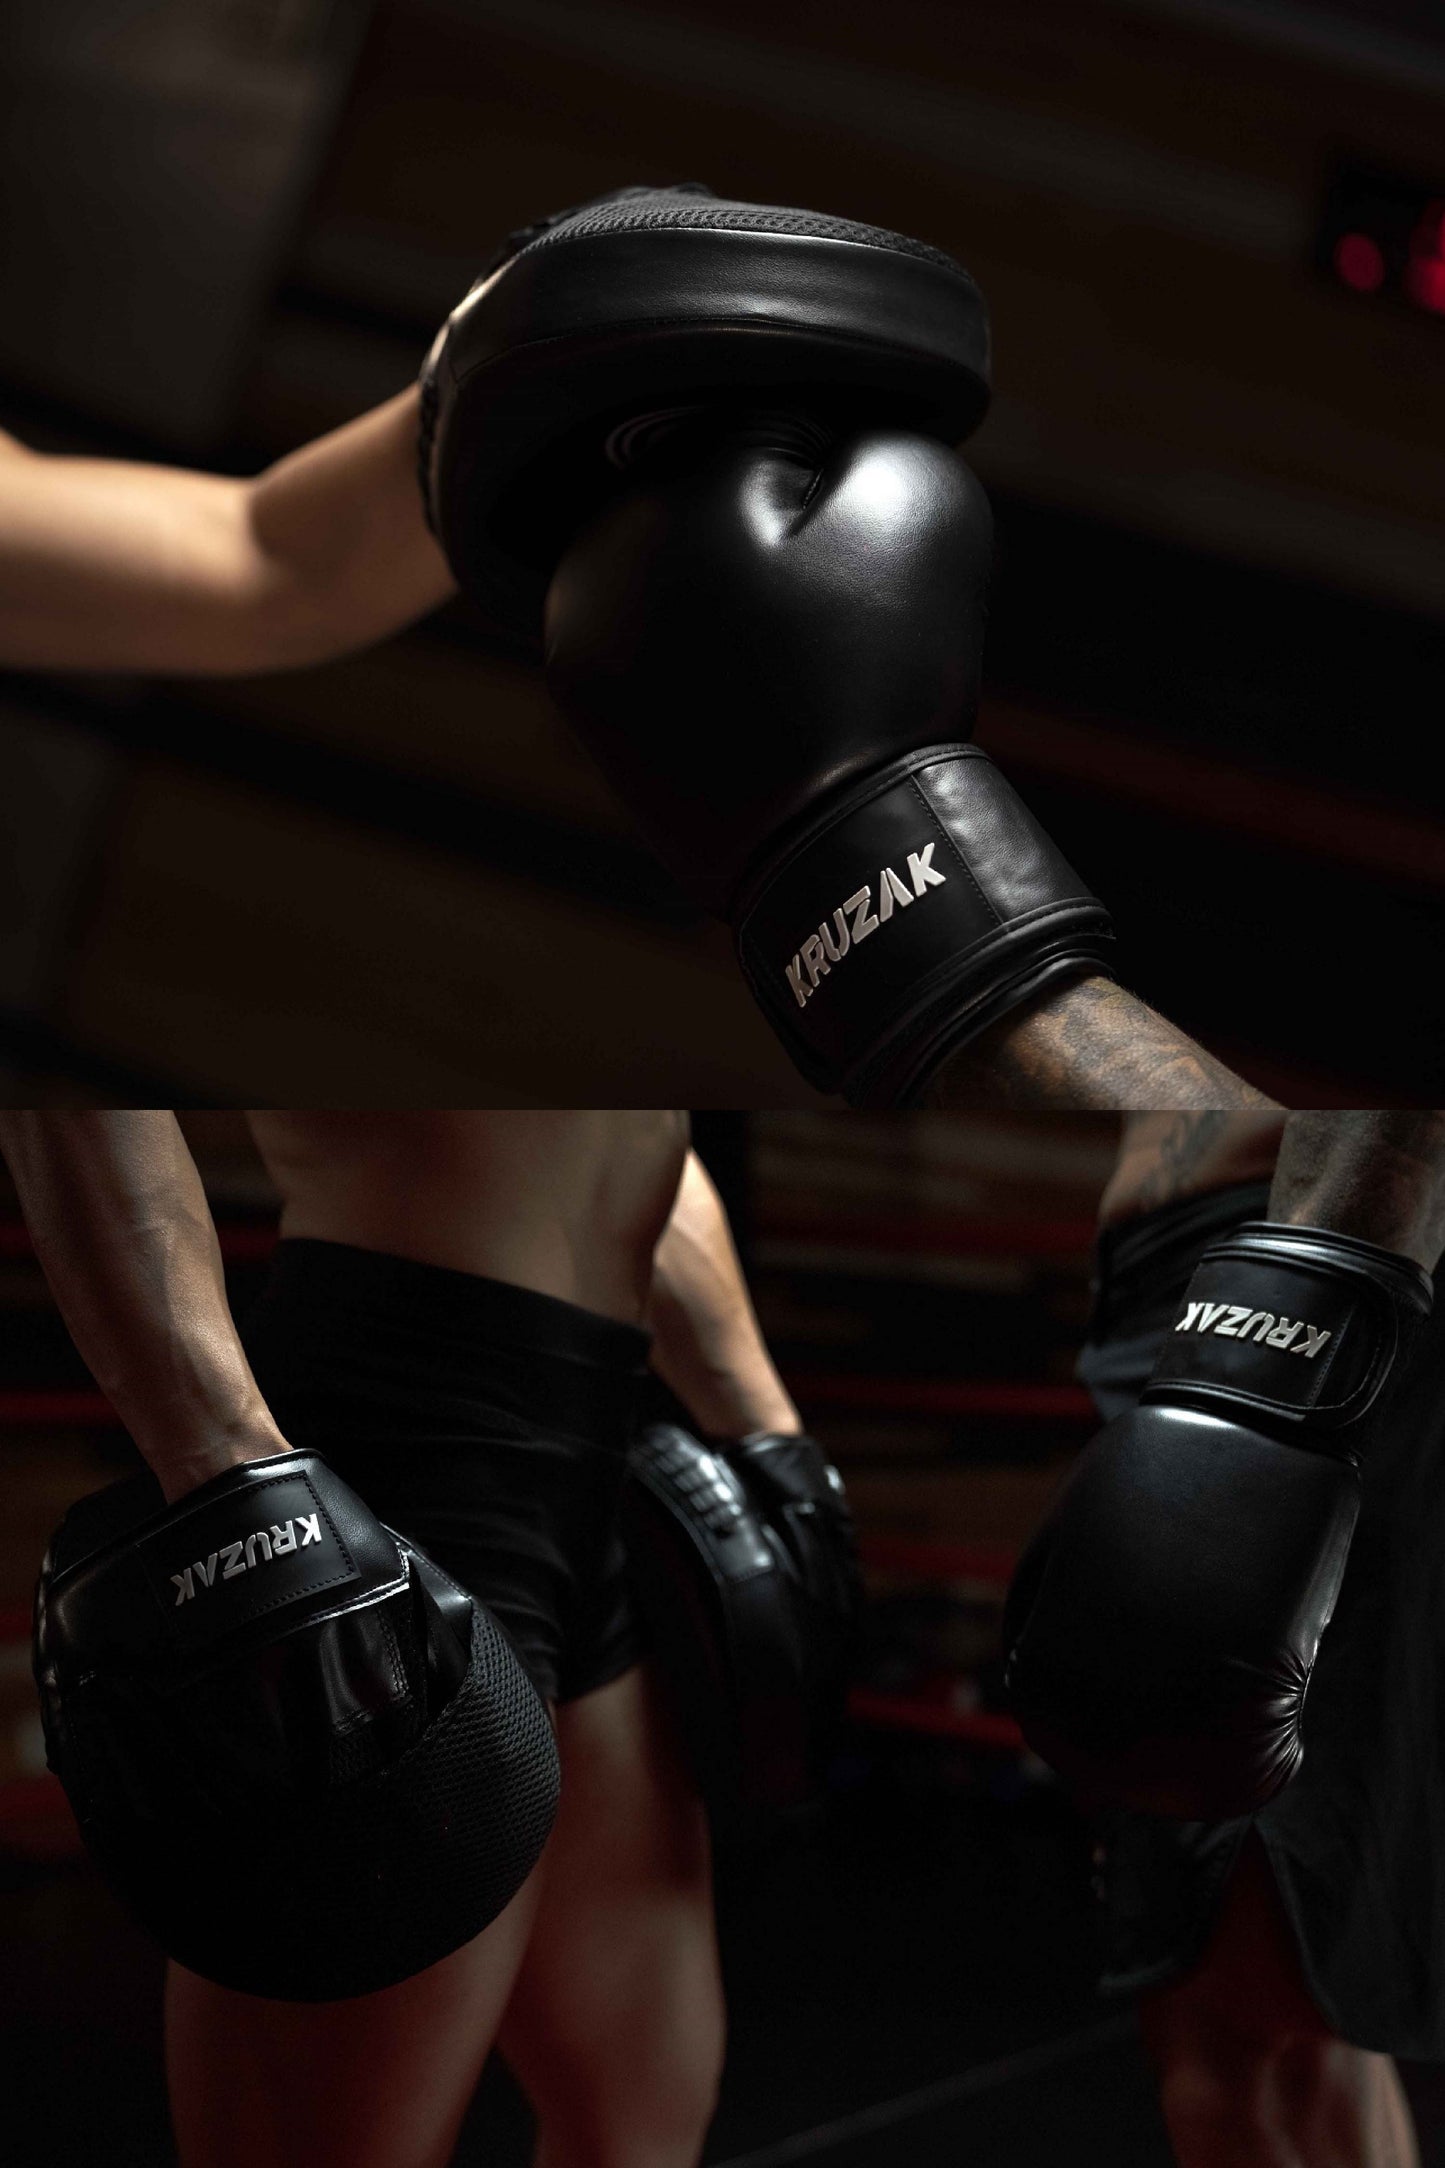 Product demonstration of Kruzak Unisex Black boxing gloves